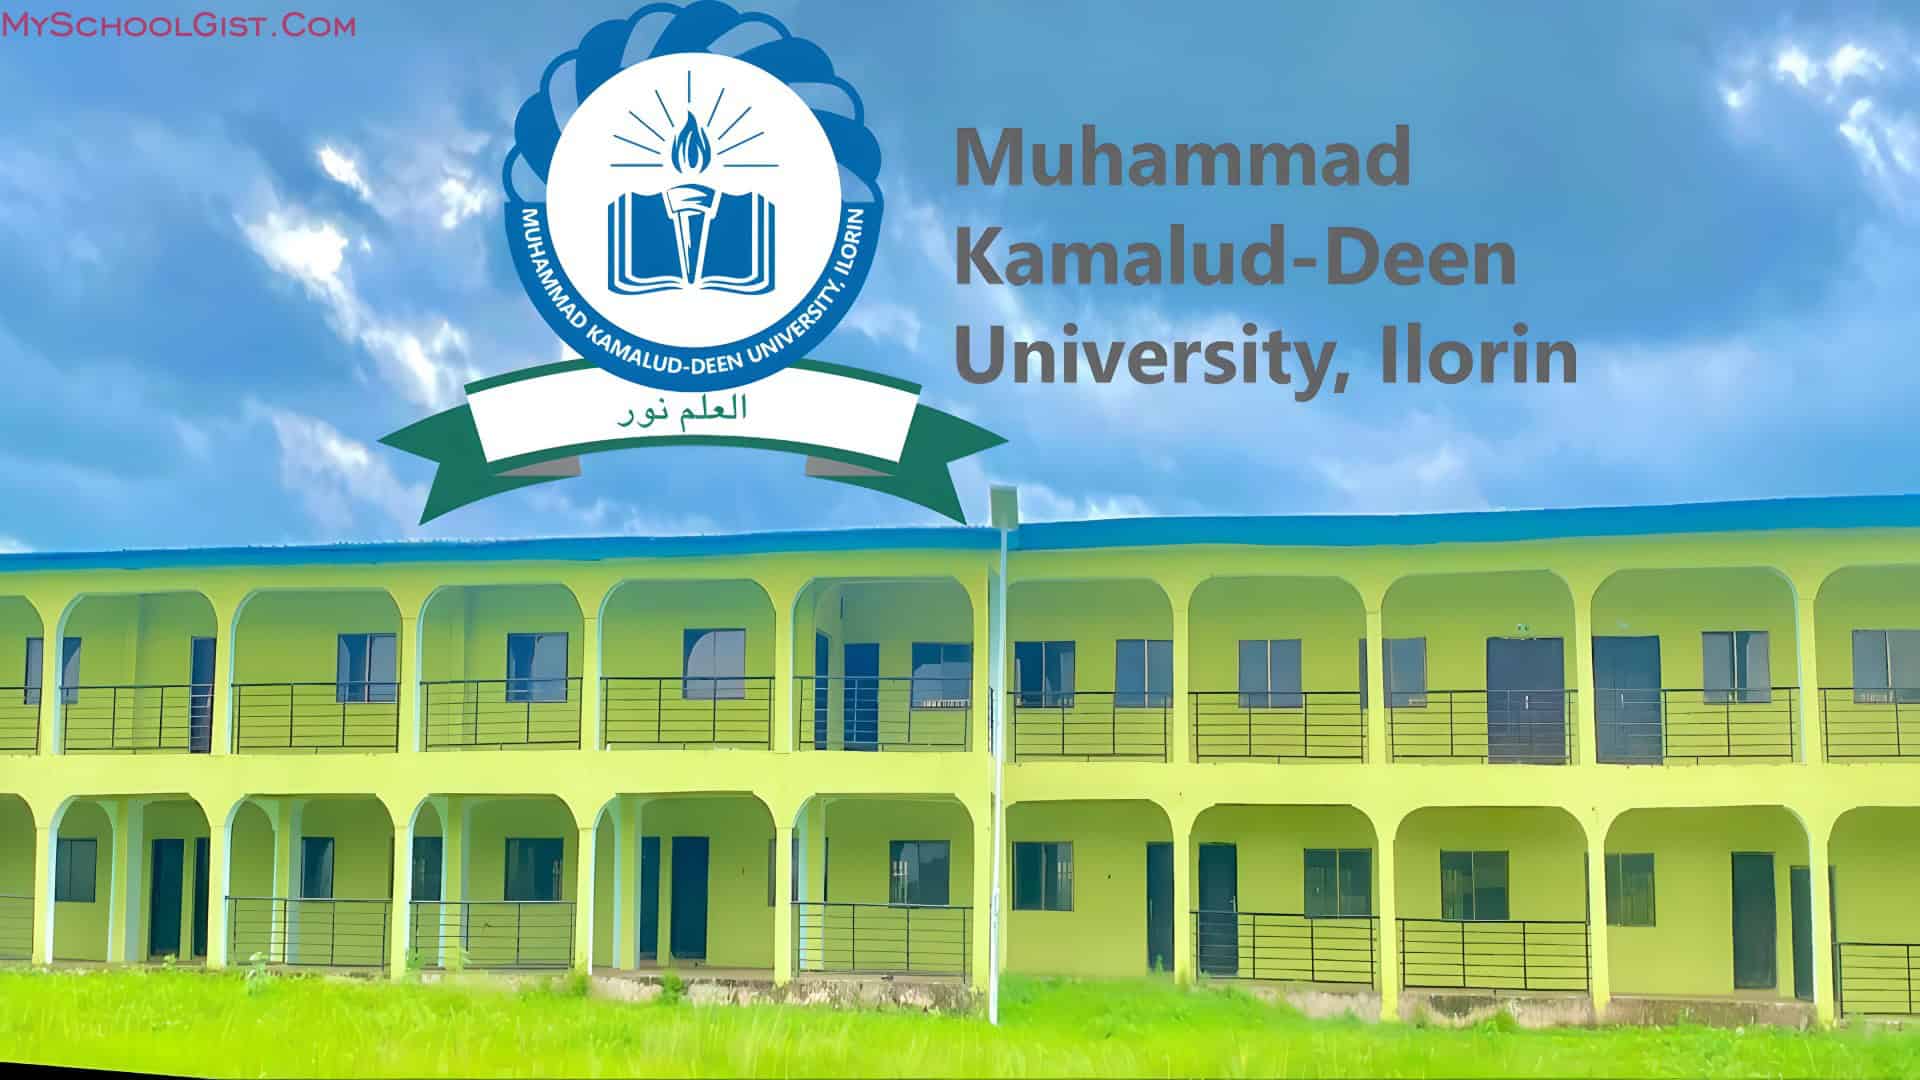 Muhammad Kamalud-deen University (MKU) Post-UTME/Direct Entry Form